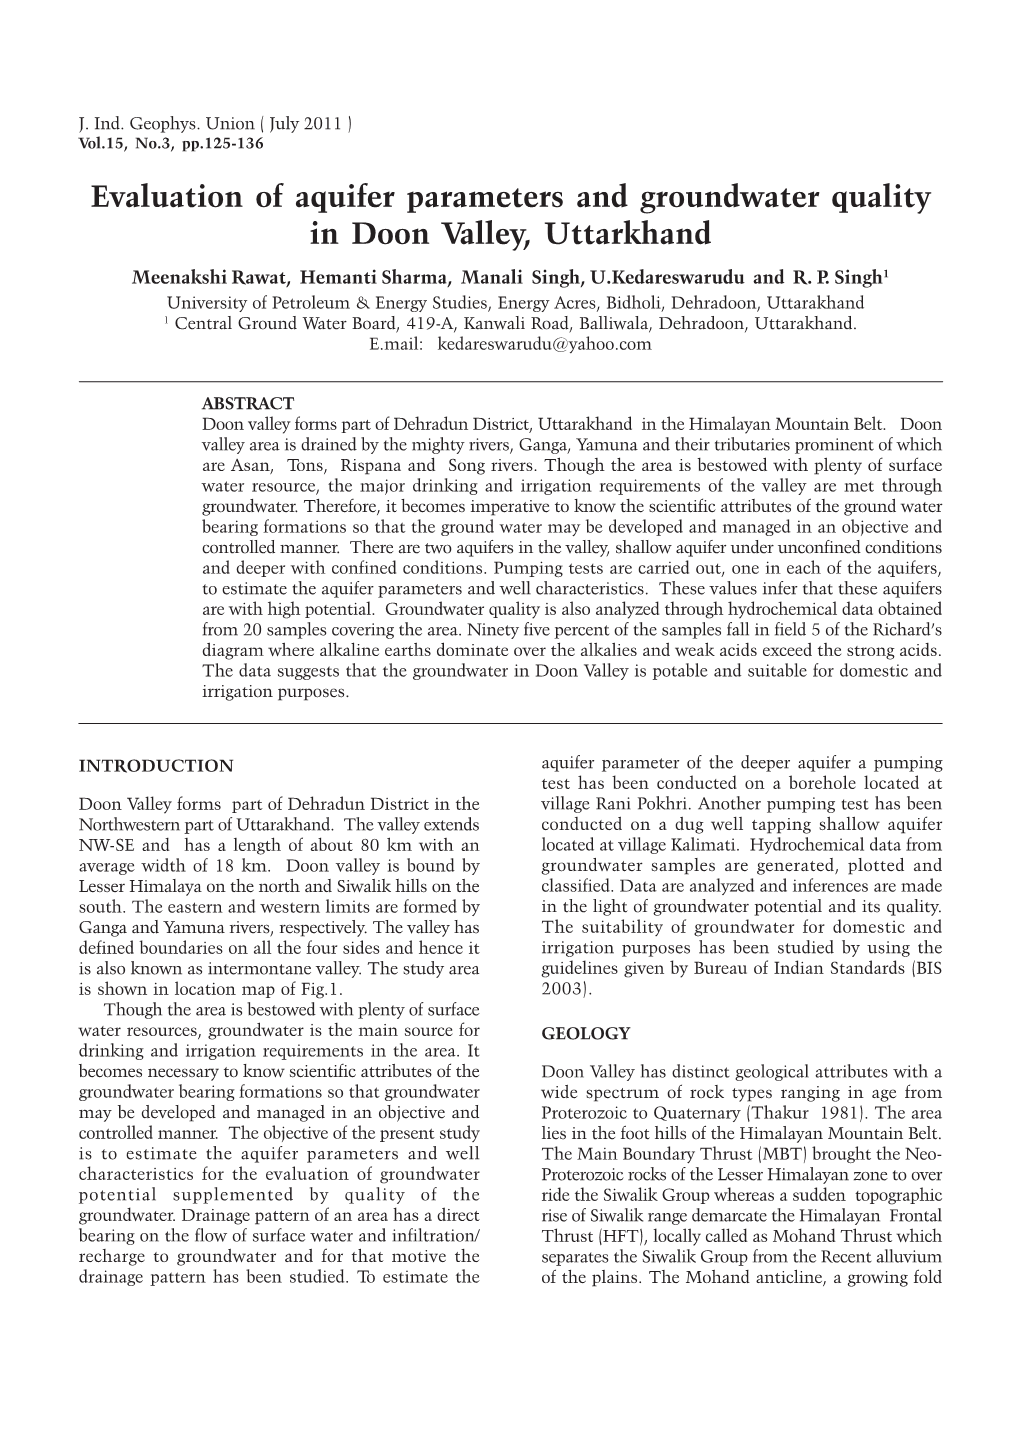 Evaluation of Aquifer Parameters and Groundwater Quality in Doon Valley, Uttarkhand Meenakshi Rawat, Hemanti Sharma, Manali Singh, U.Kedareswarudu and R